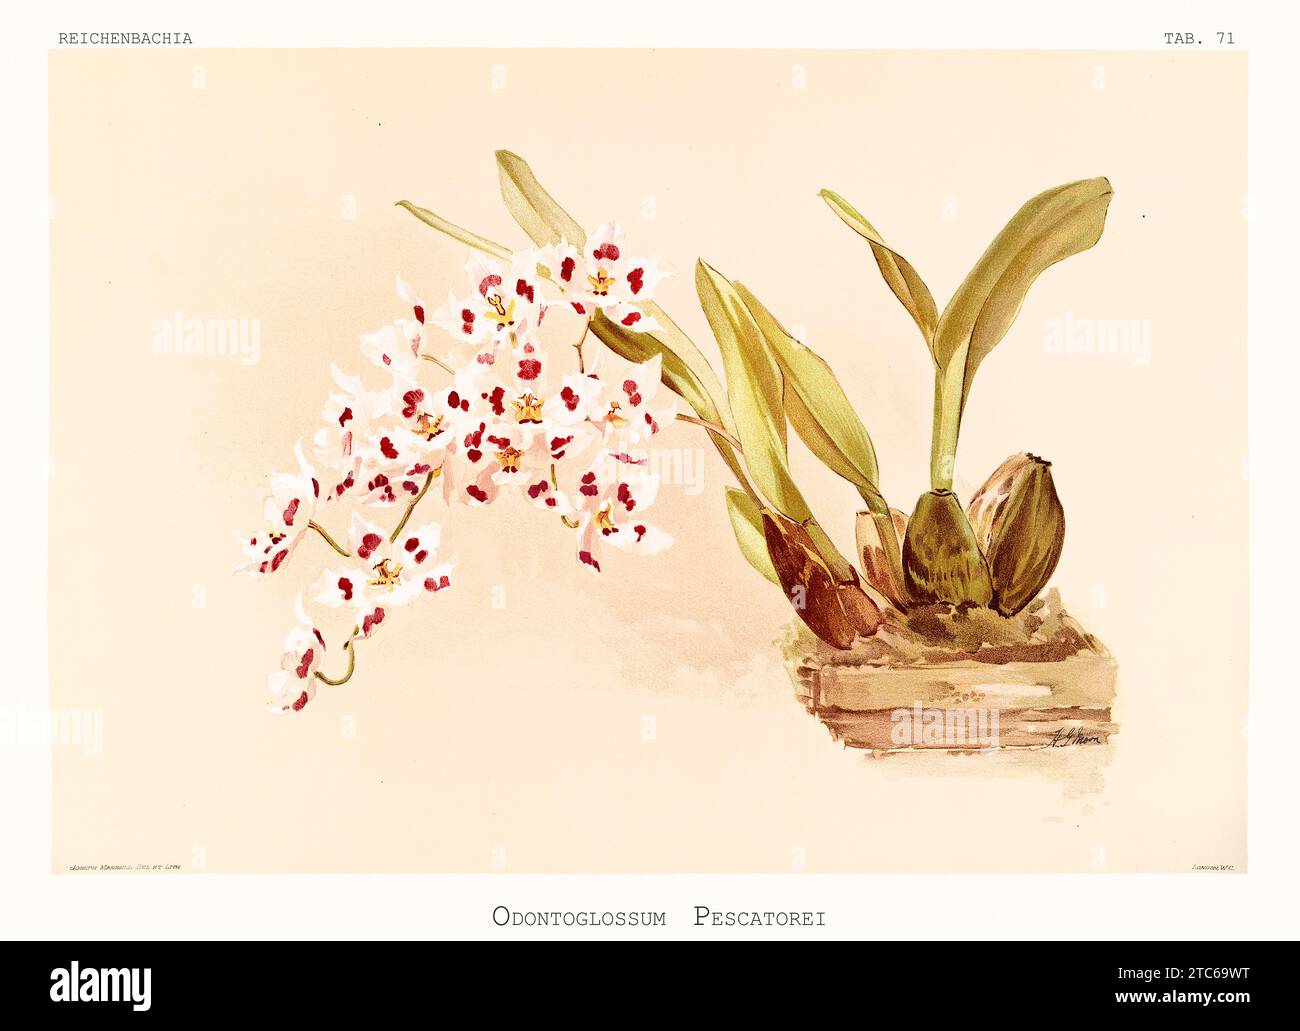 Old illustration of  Grand Odontoglossum (Oncidium nobile). Reichenbachia, by F. Sander. St. Albans, UK, 1888 - 1894 Stock Photo